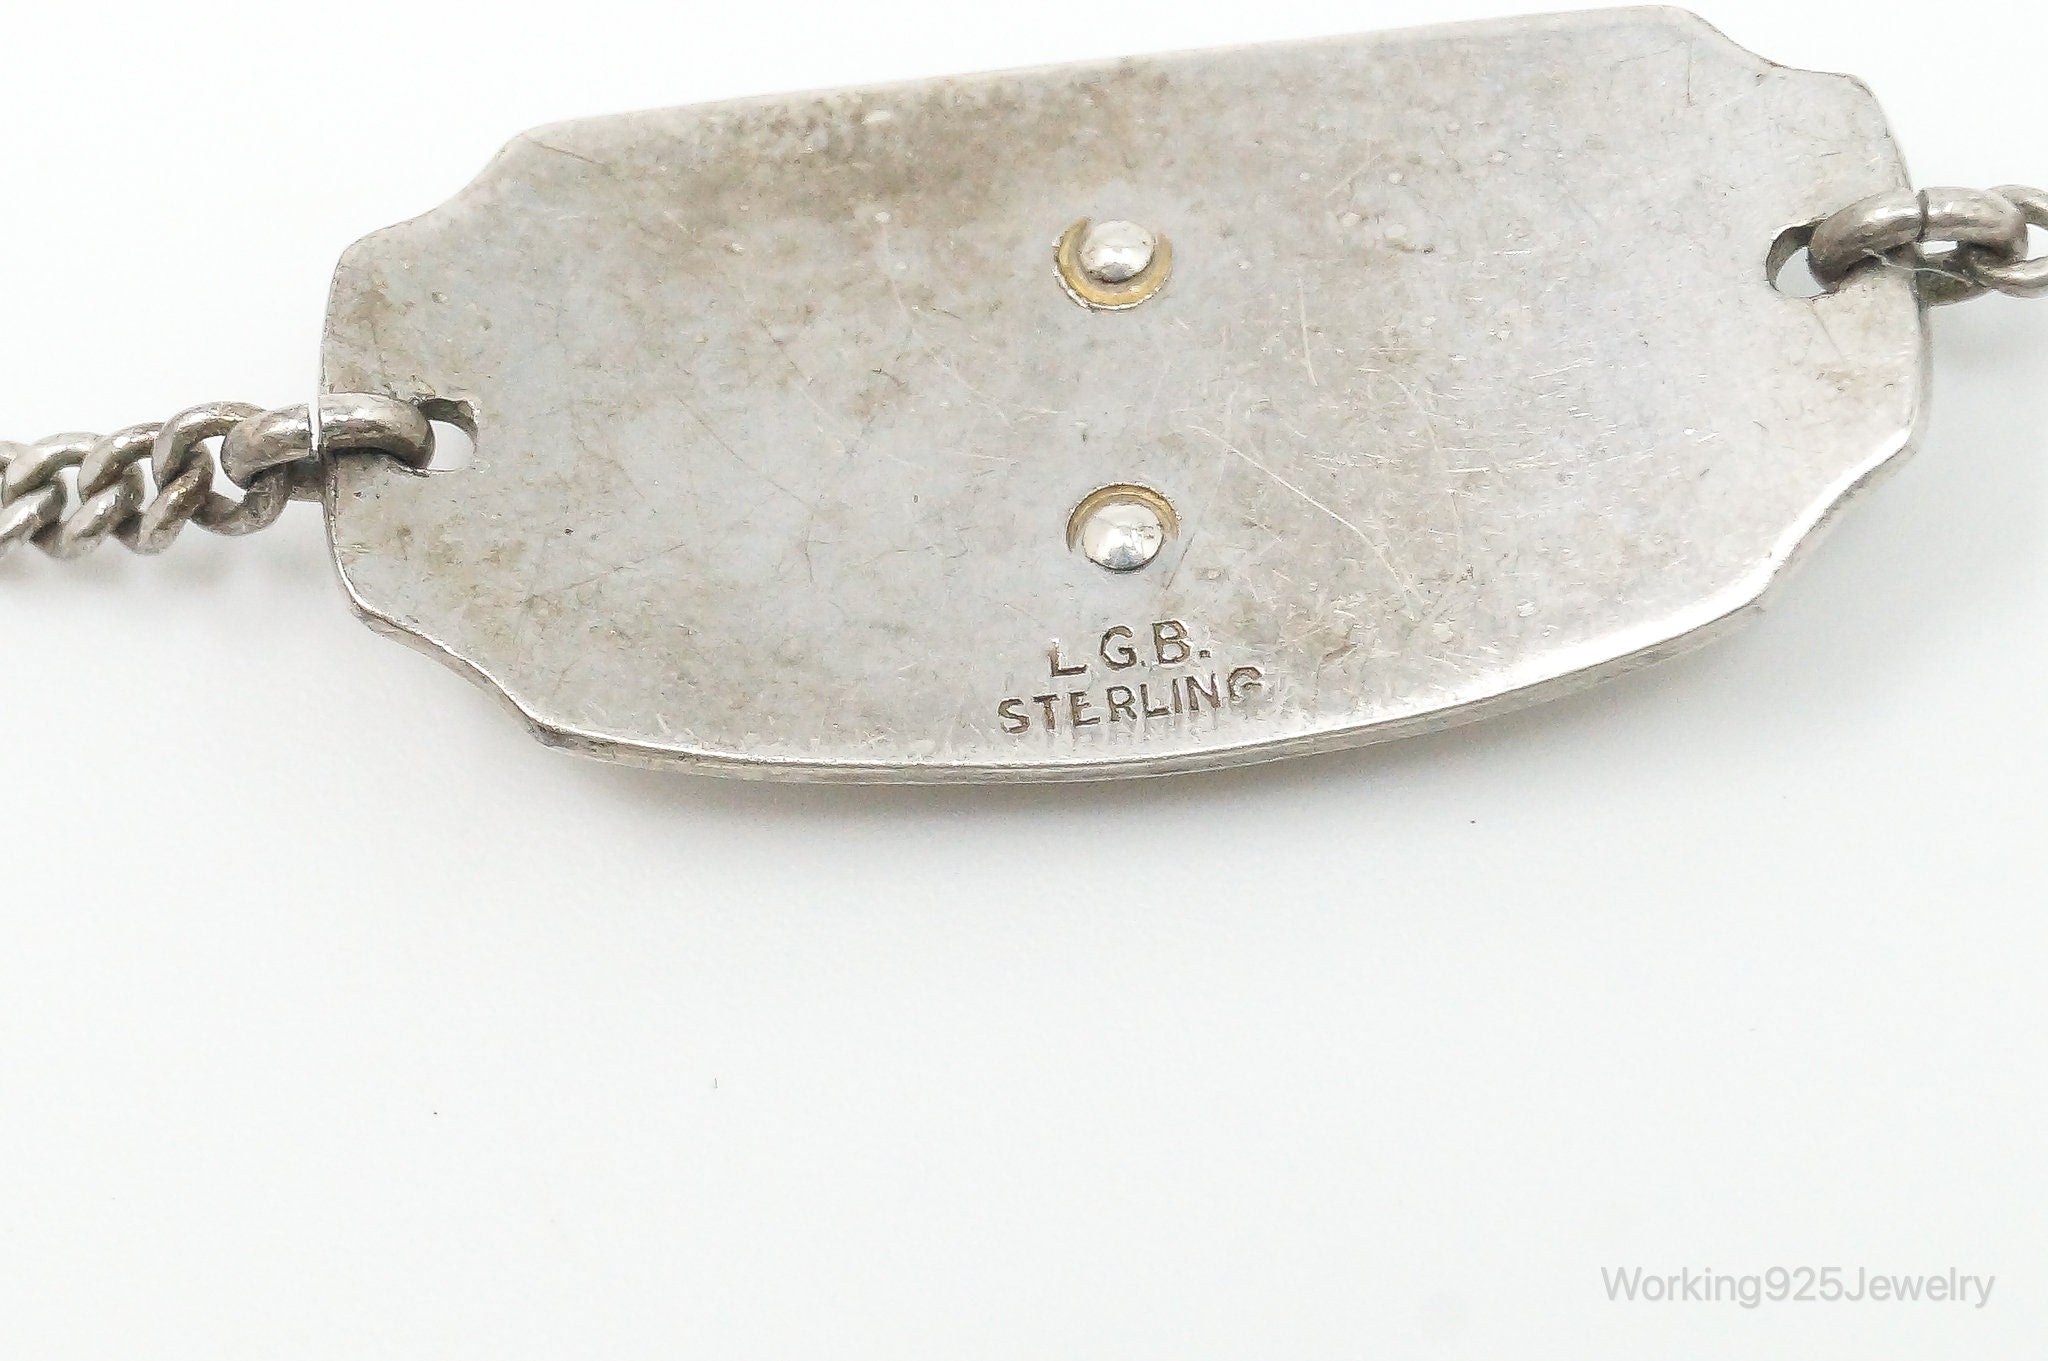 1940s Vintage Future Homemakers of America Sterling Silver Key Charm Bracelet